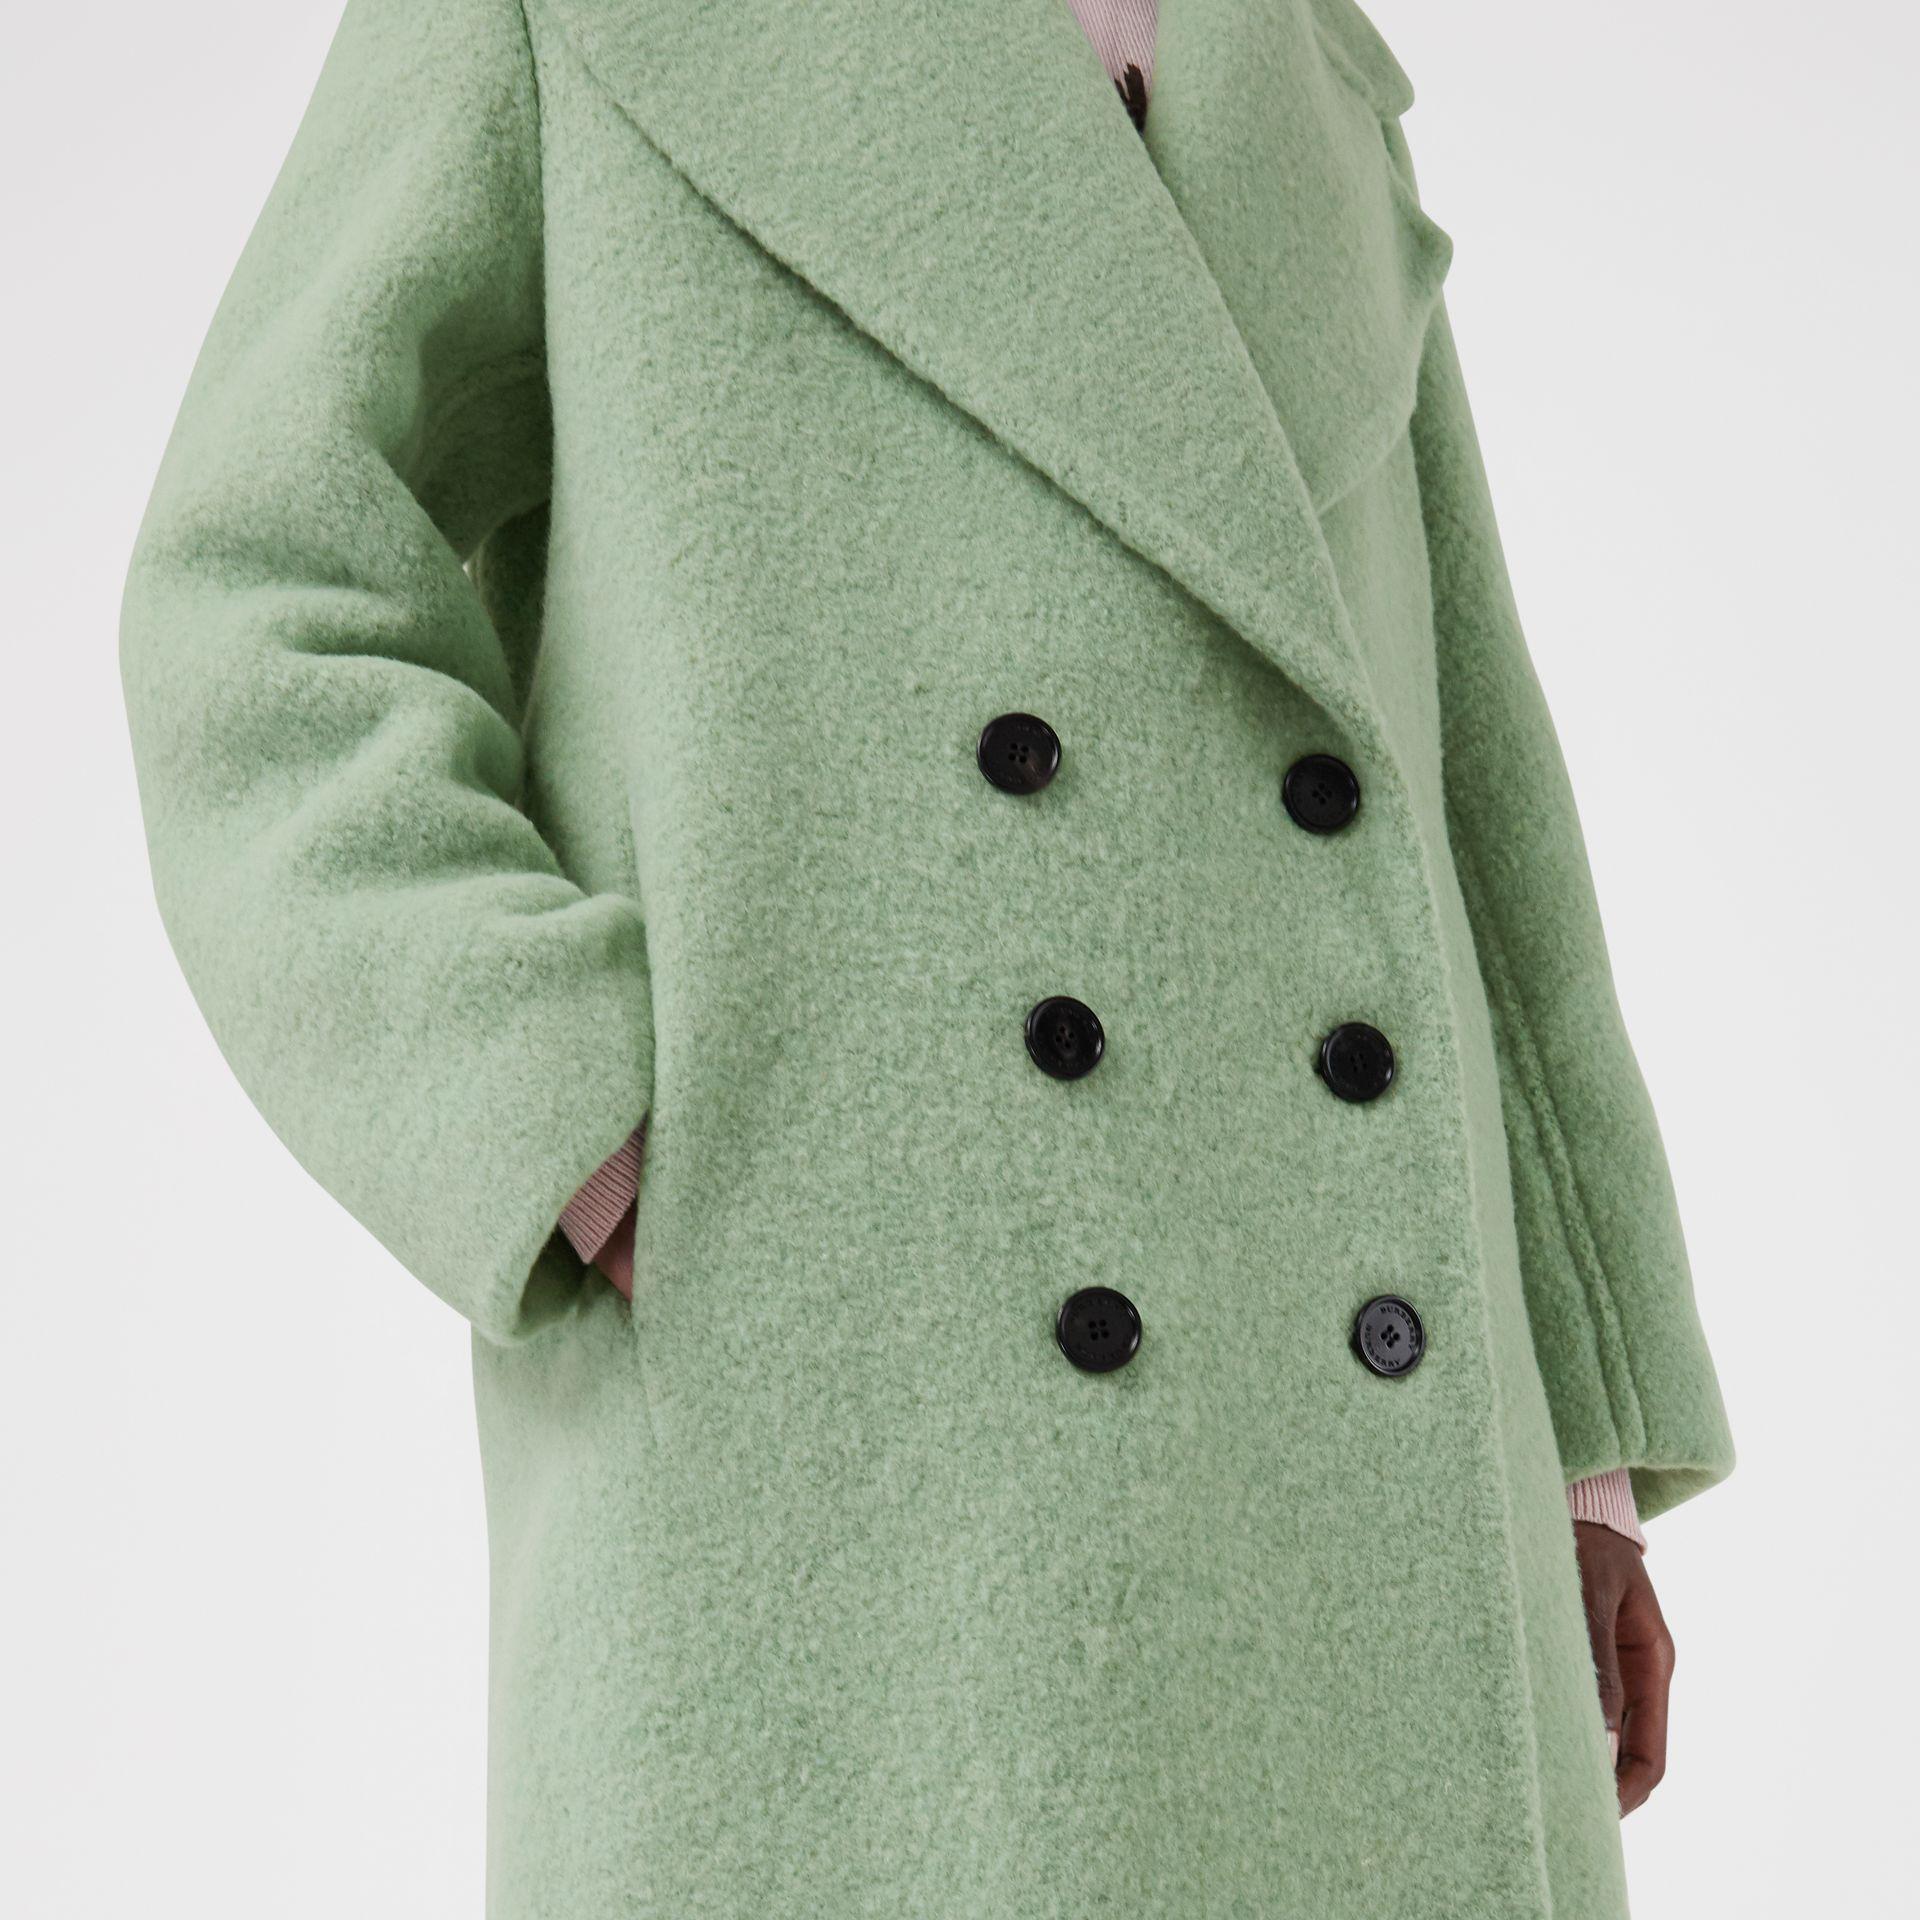 Burberry Double-faced Wool Alpaca Blend Oversized Coat in Green - Lyst